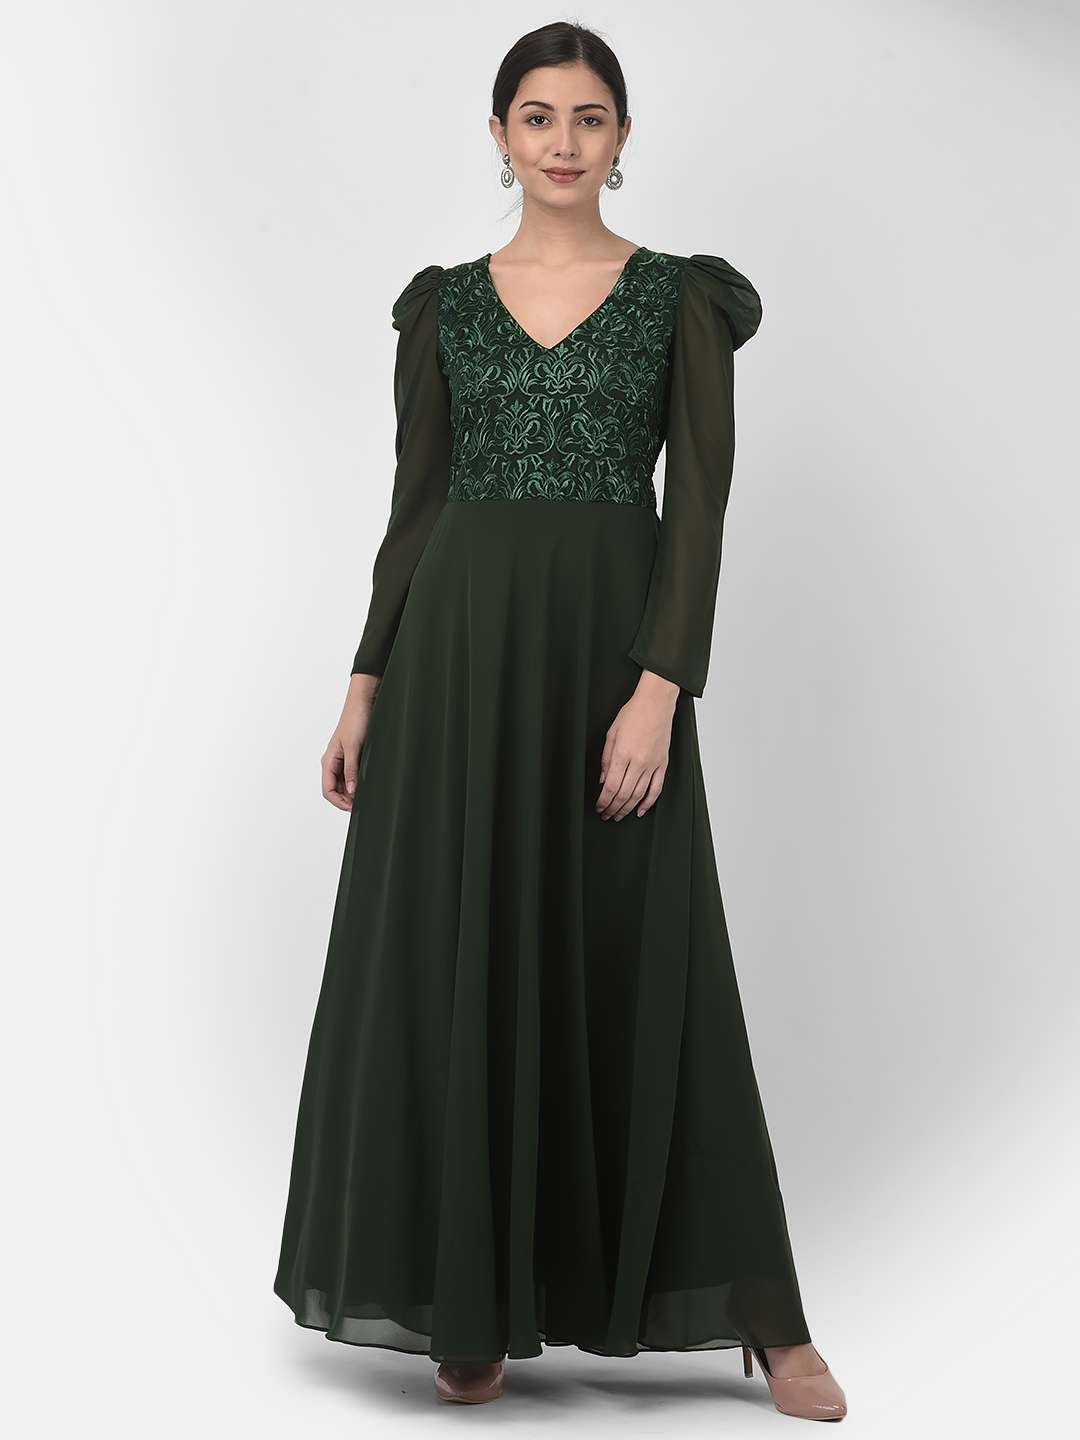 Shop maxi green dress from Bebaak: Handmade clothing